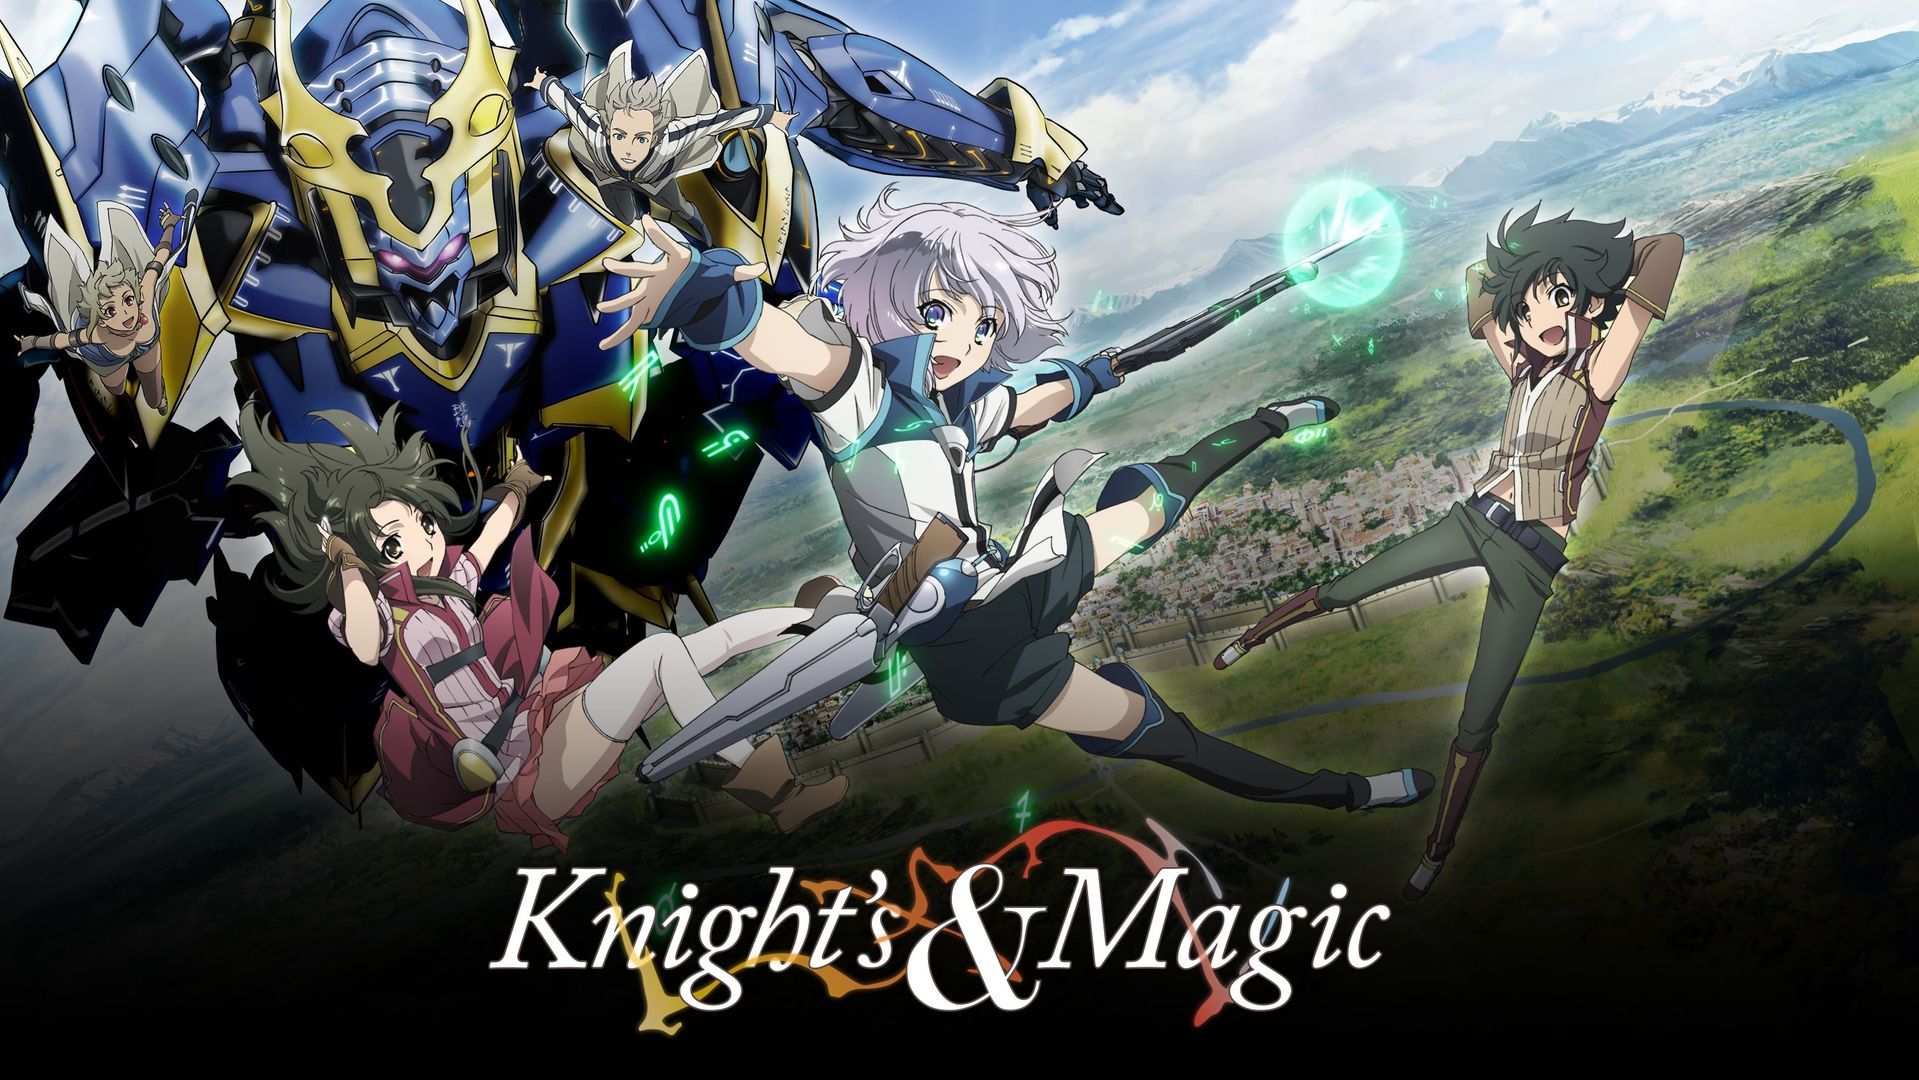 Knight's & Magic # 29